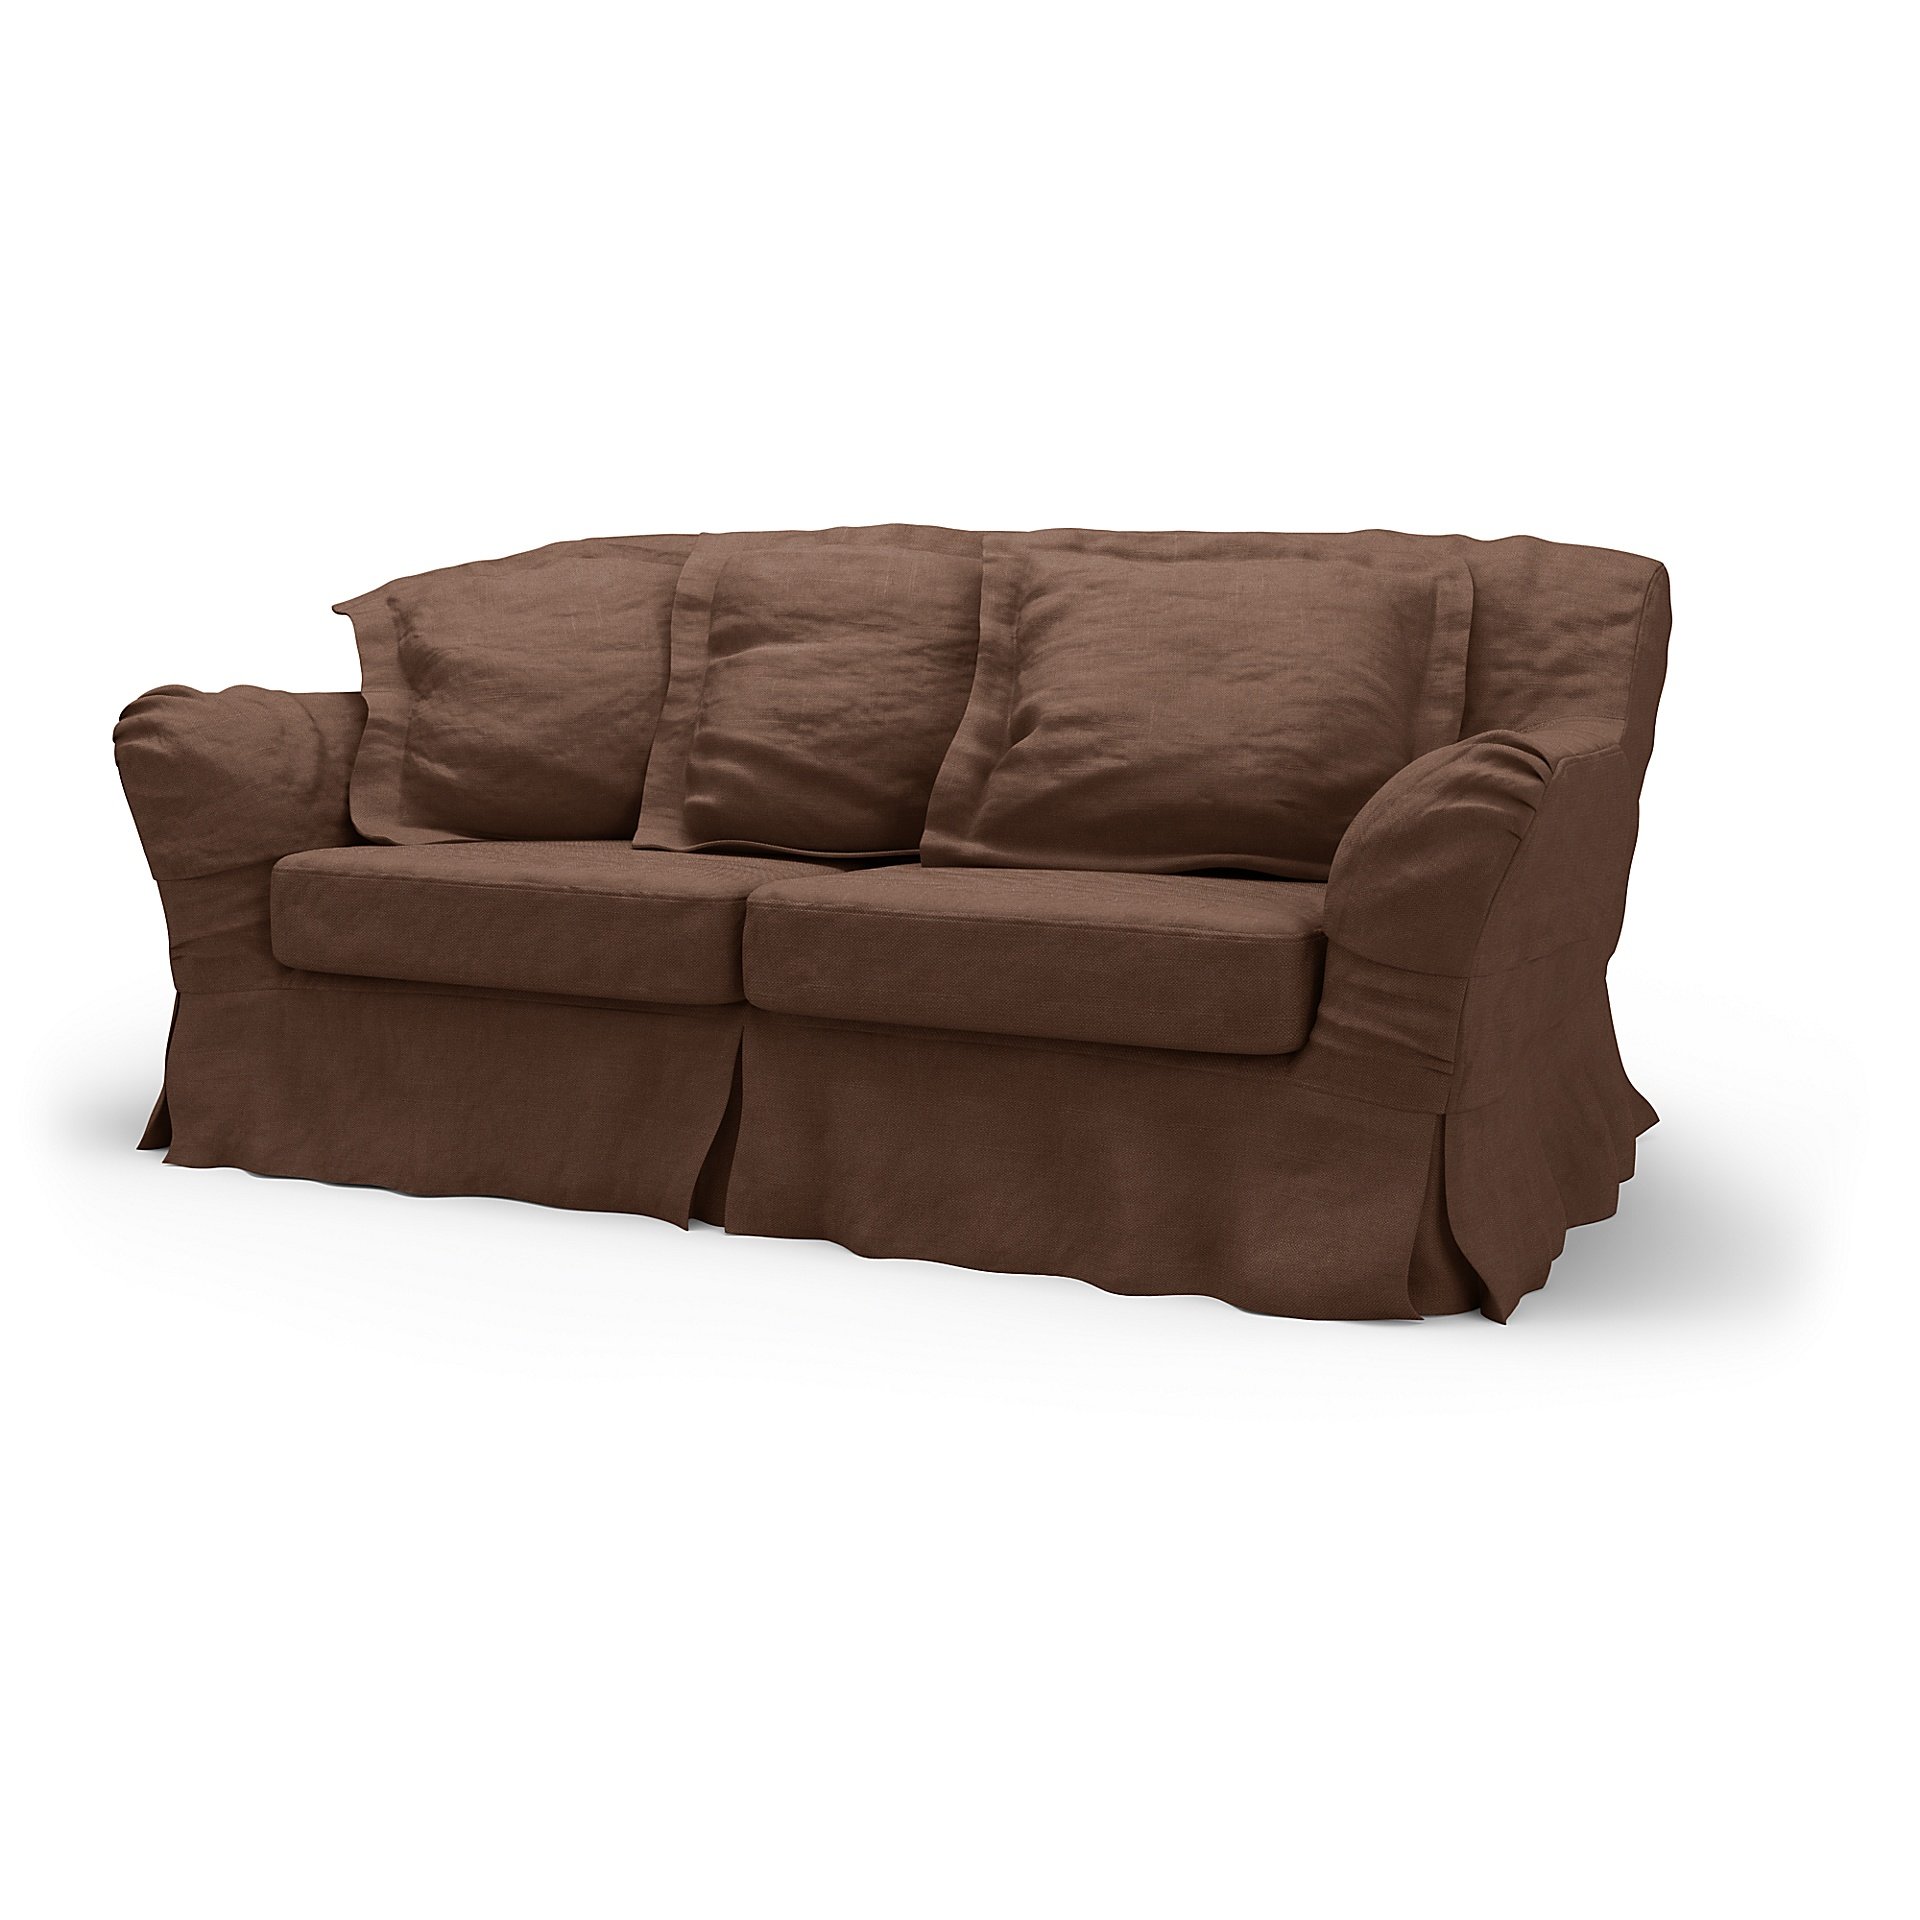 IKEA - Tomelilla 2 Seater Sofa Cover, Chocolate, Linen - Bemz